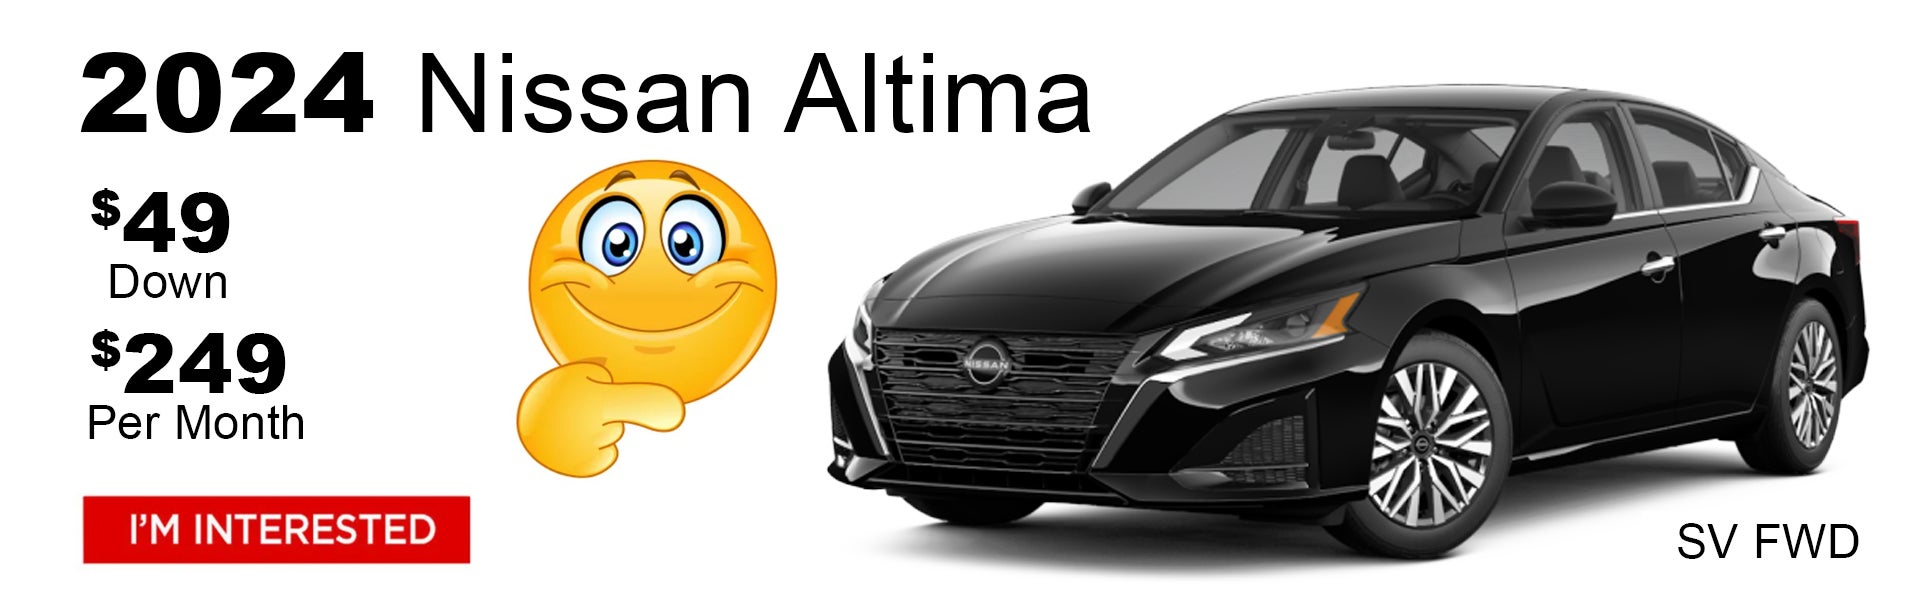 New Nissan Altima $49 Dealer Special